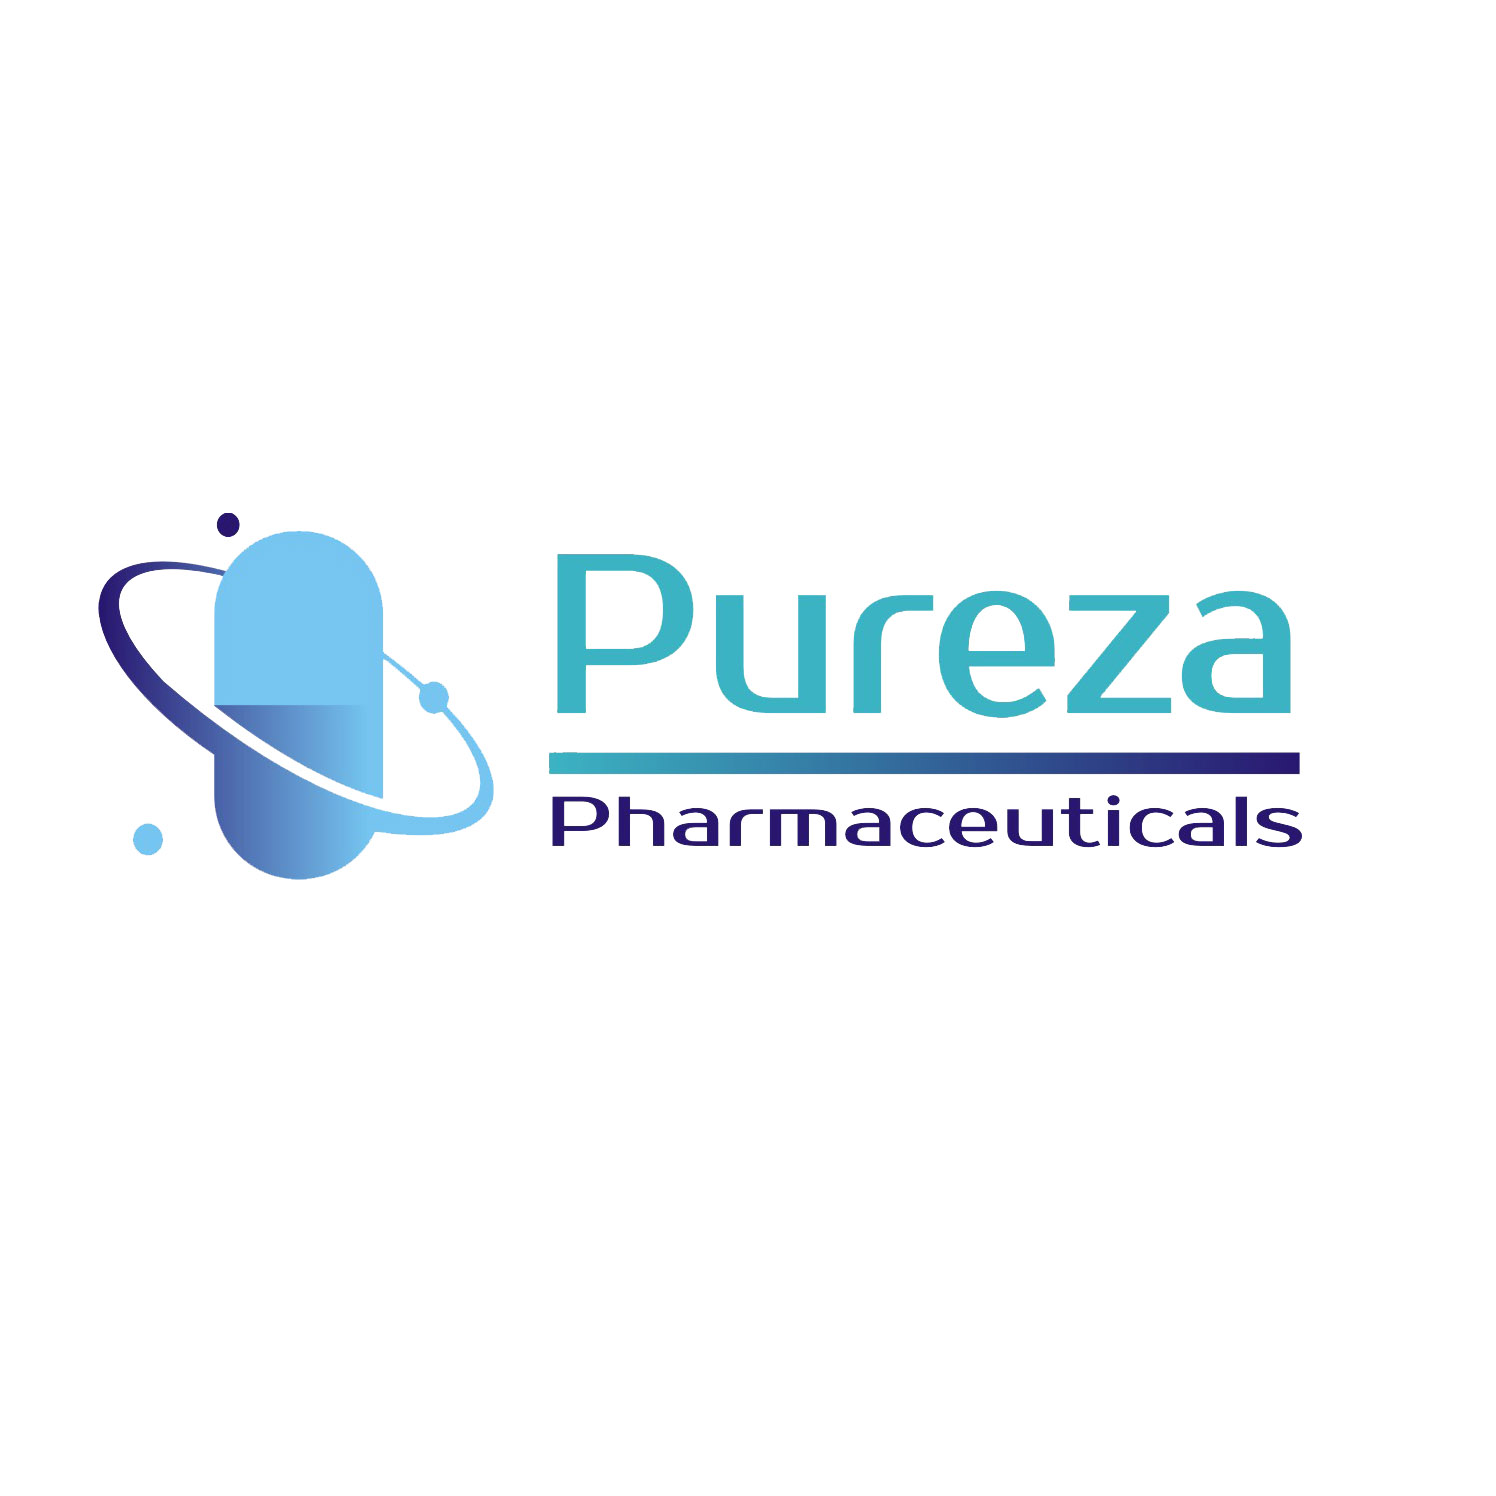 Pharma PCD Franchise Companies